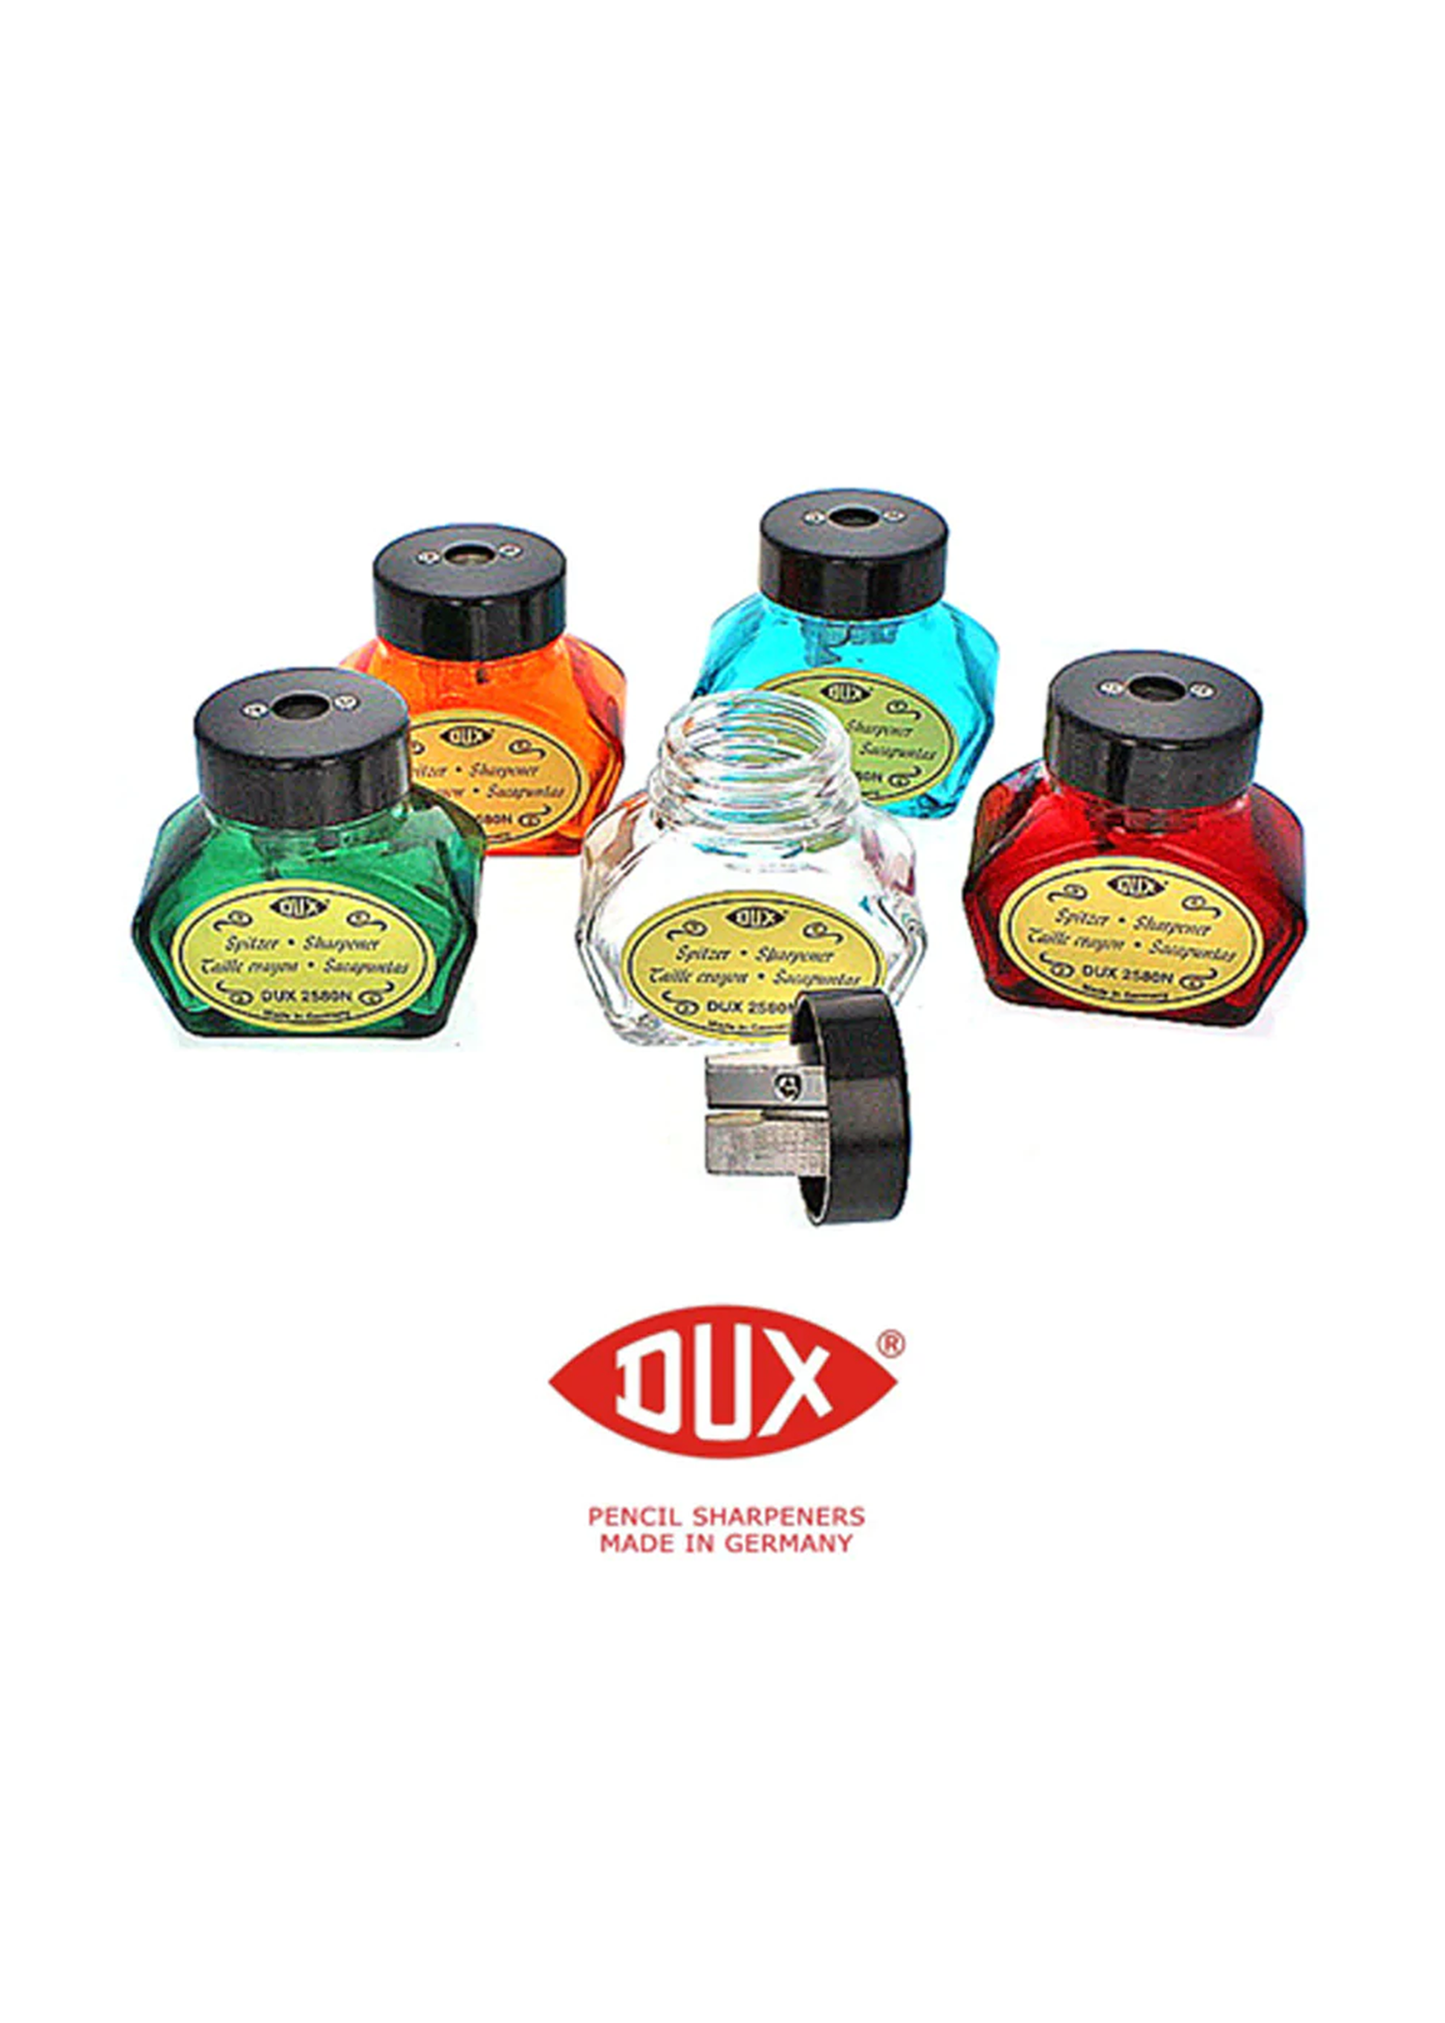 DUX Glass Inkwell Pencil Sharpener - Orange